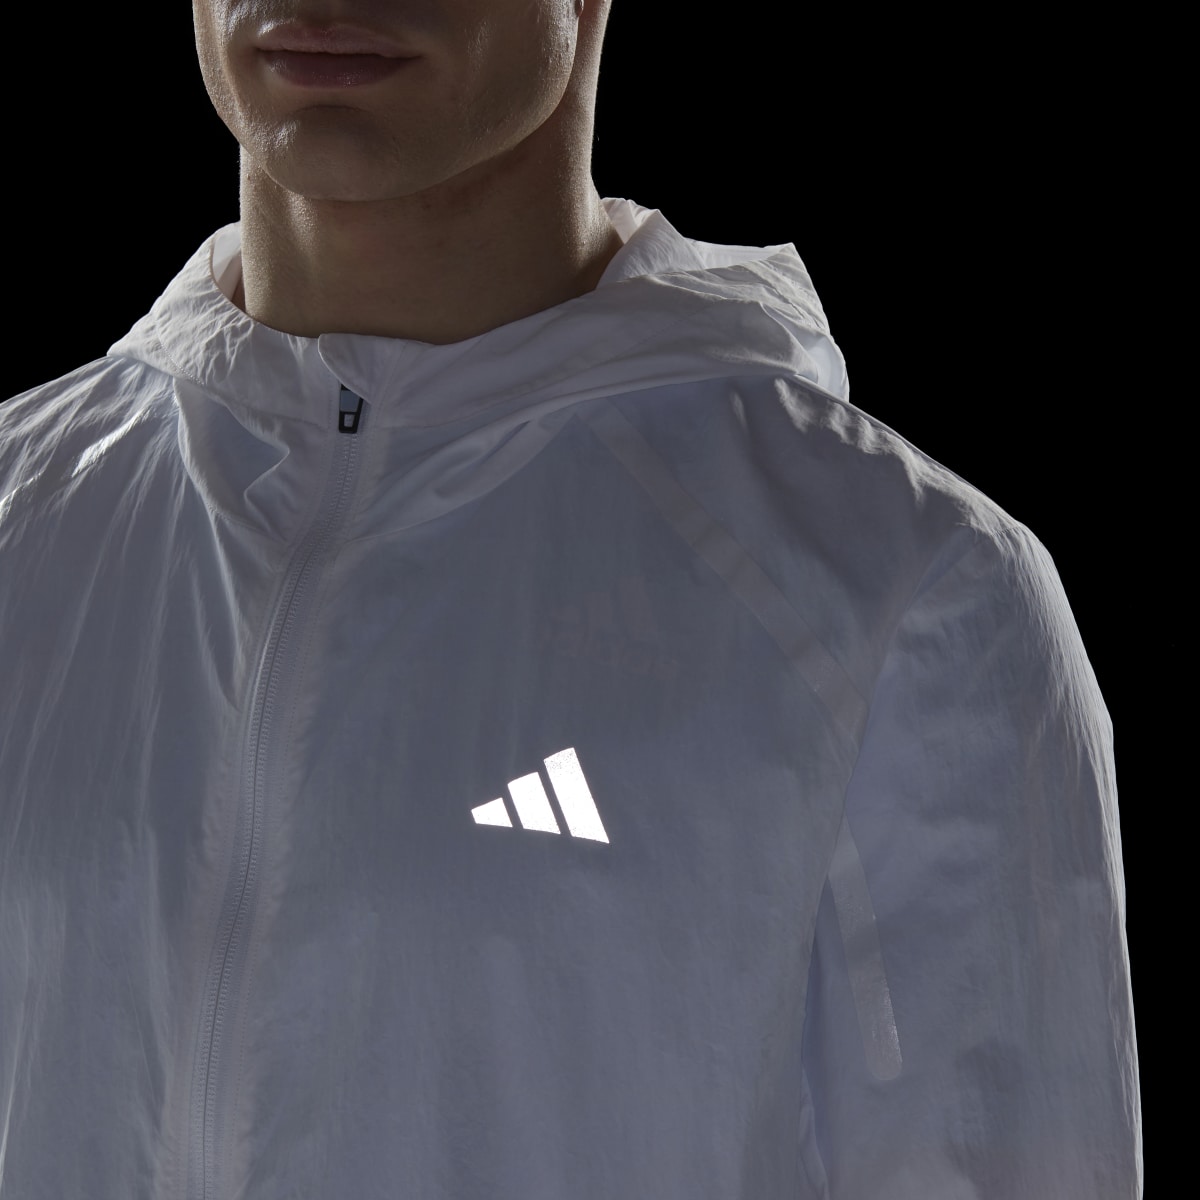 Adidas Marathon Warm-Up Running Jacket. 9